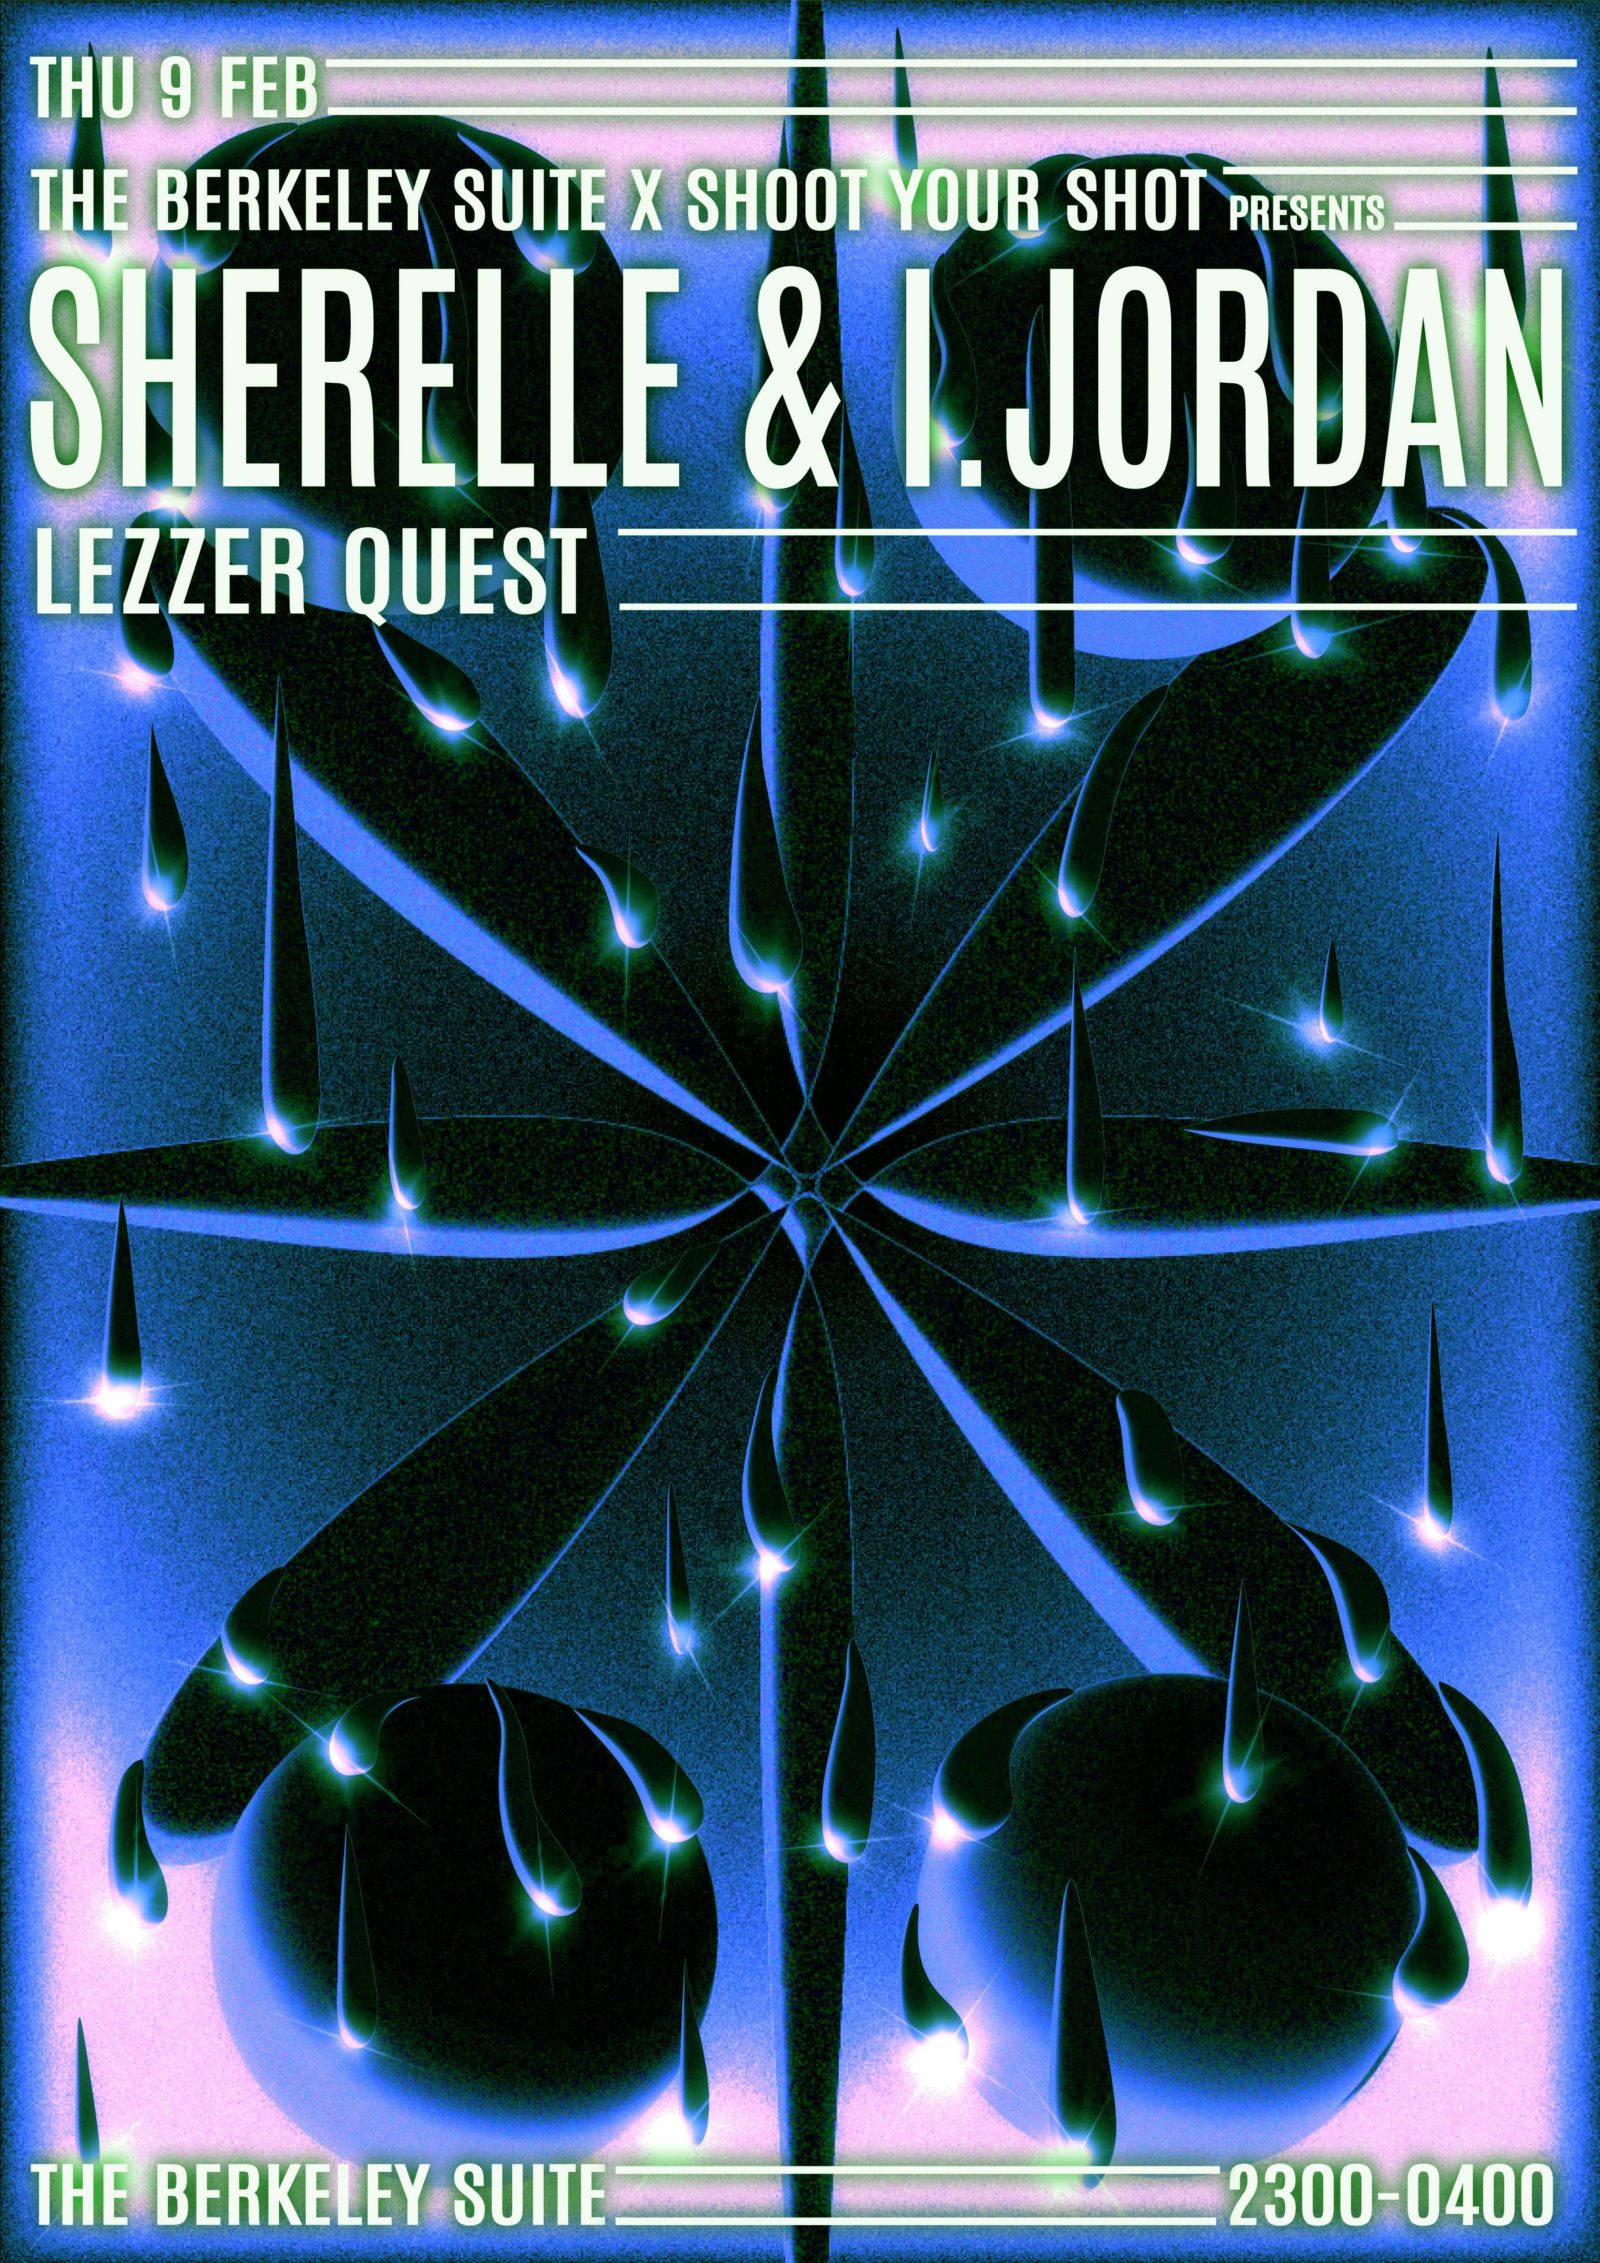 I.JORDAN & SHERELLE